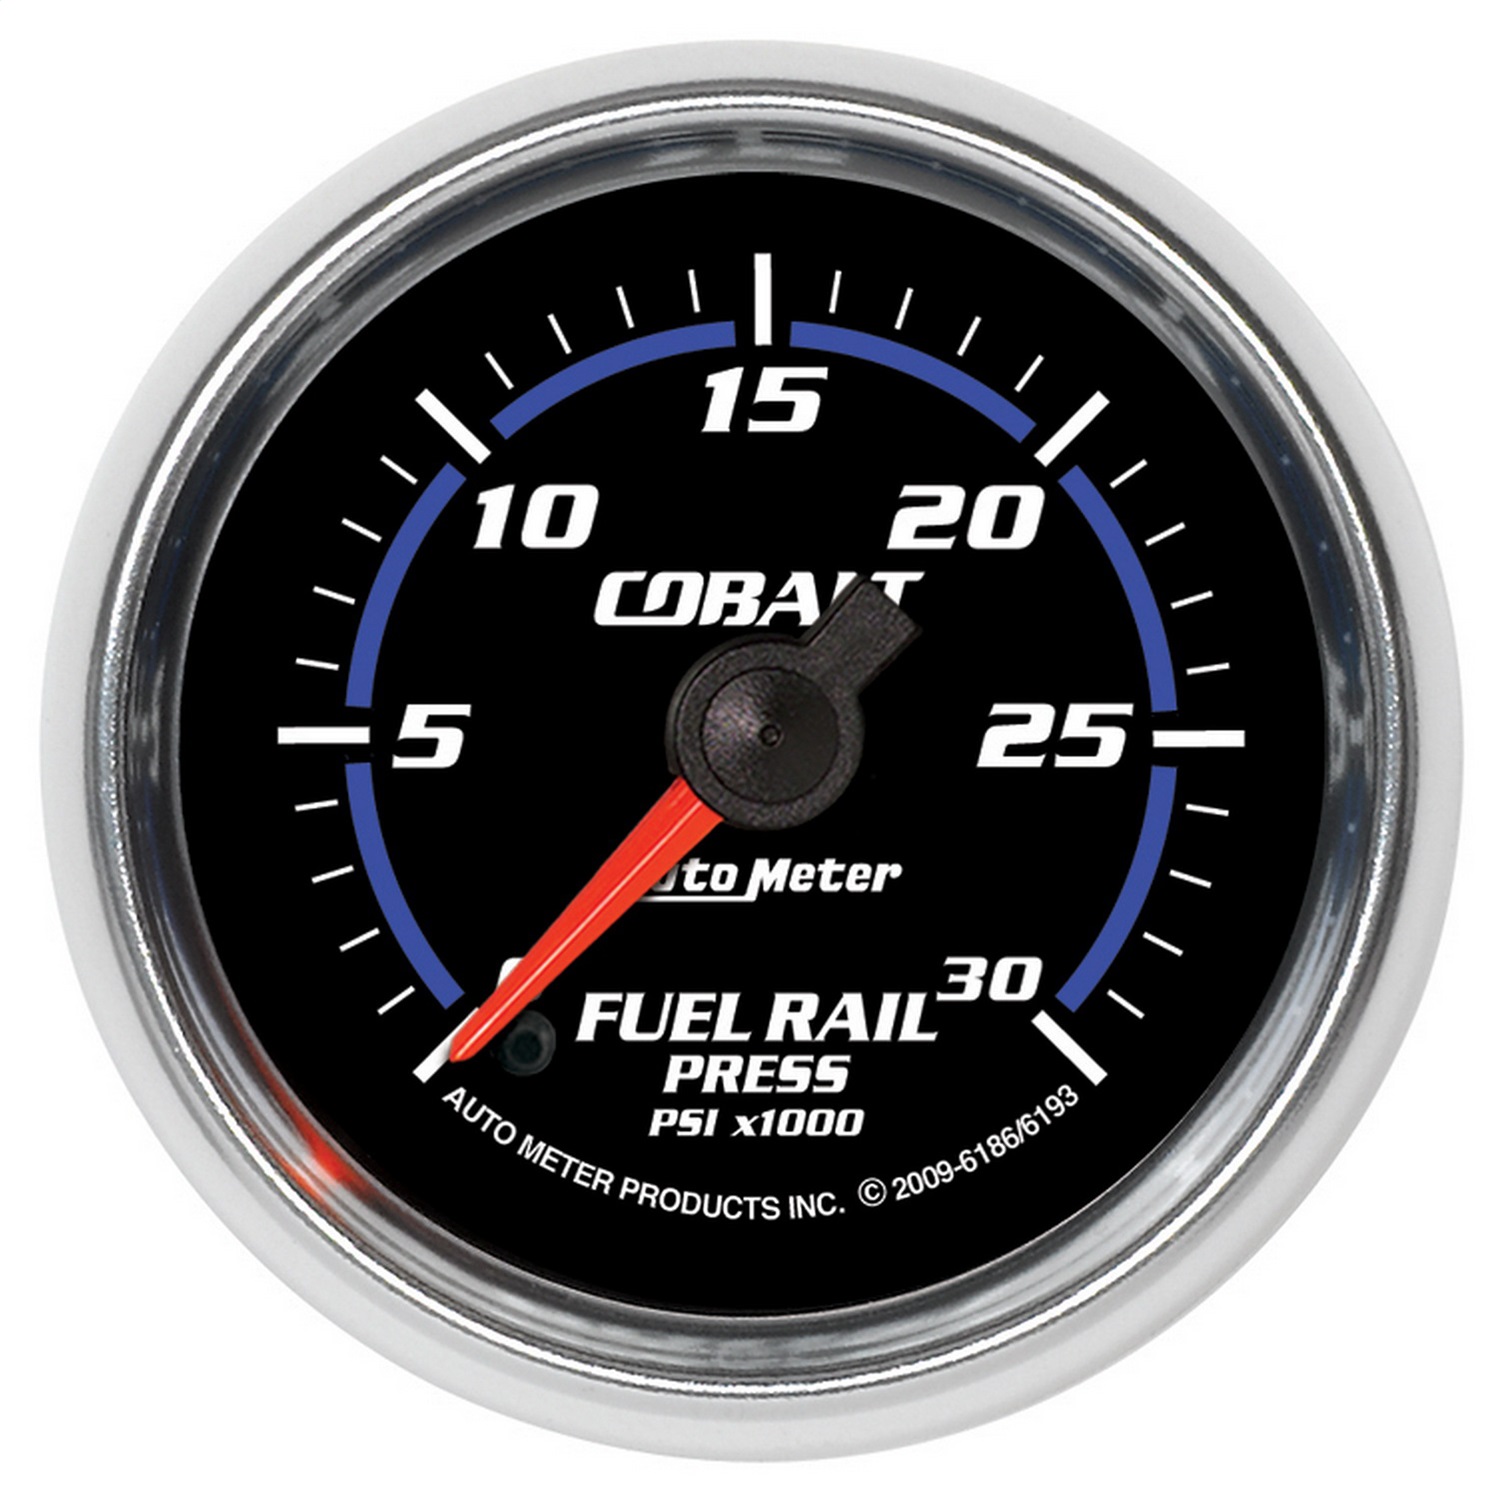 Auto Meter Auto Meter 6186 Cobalt; Fuel Rail Pressure Gauge